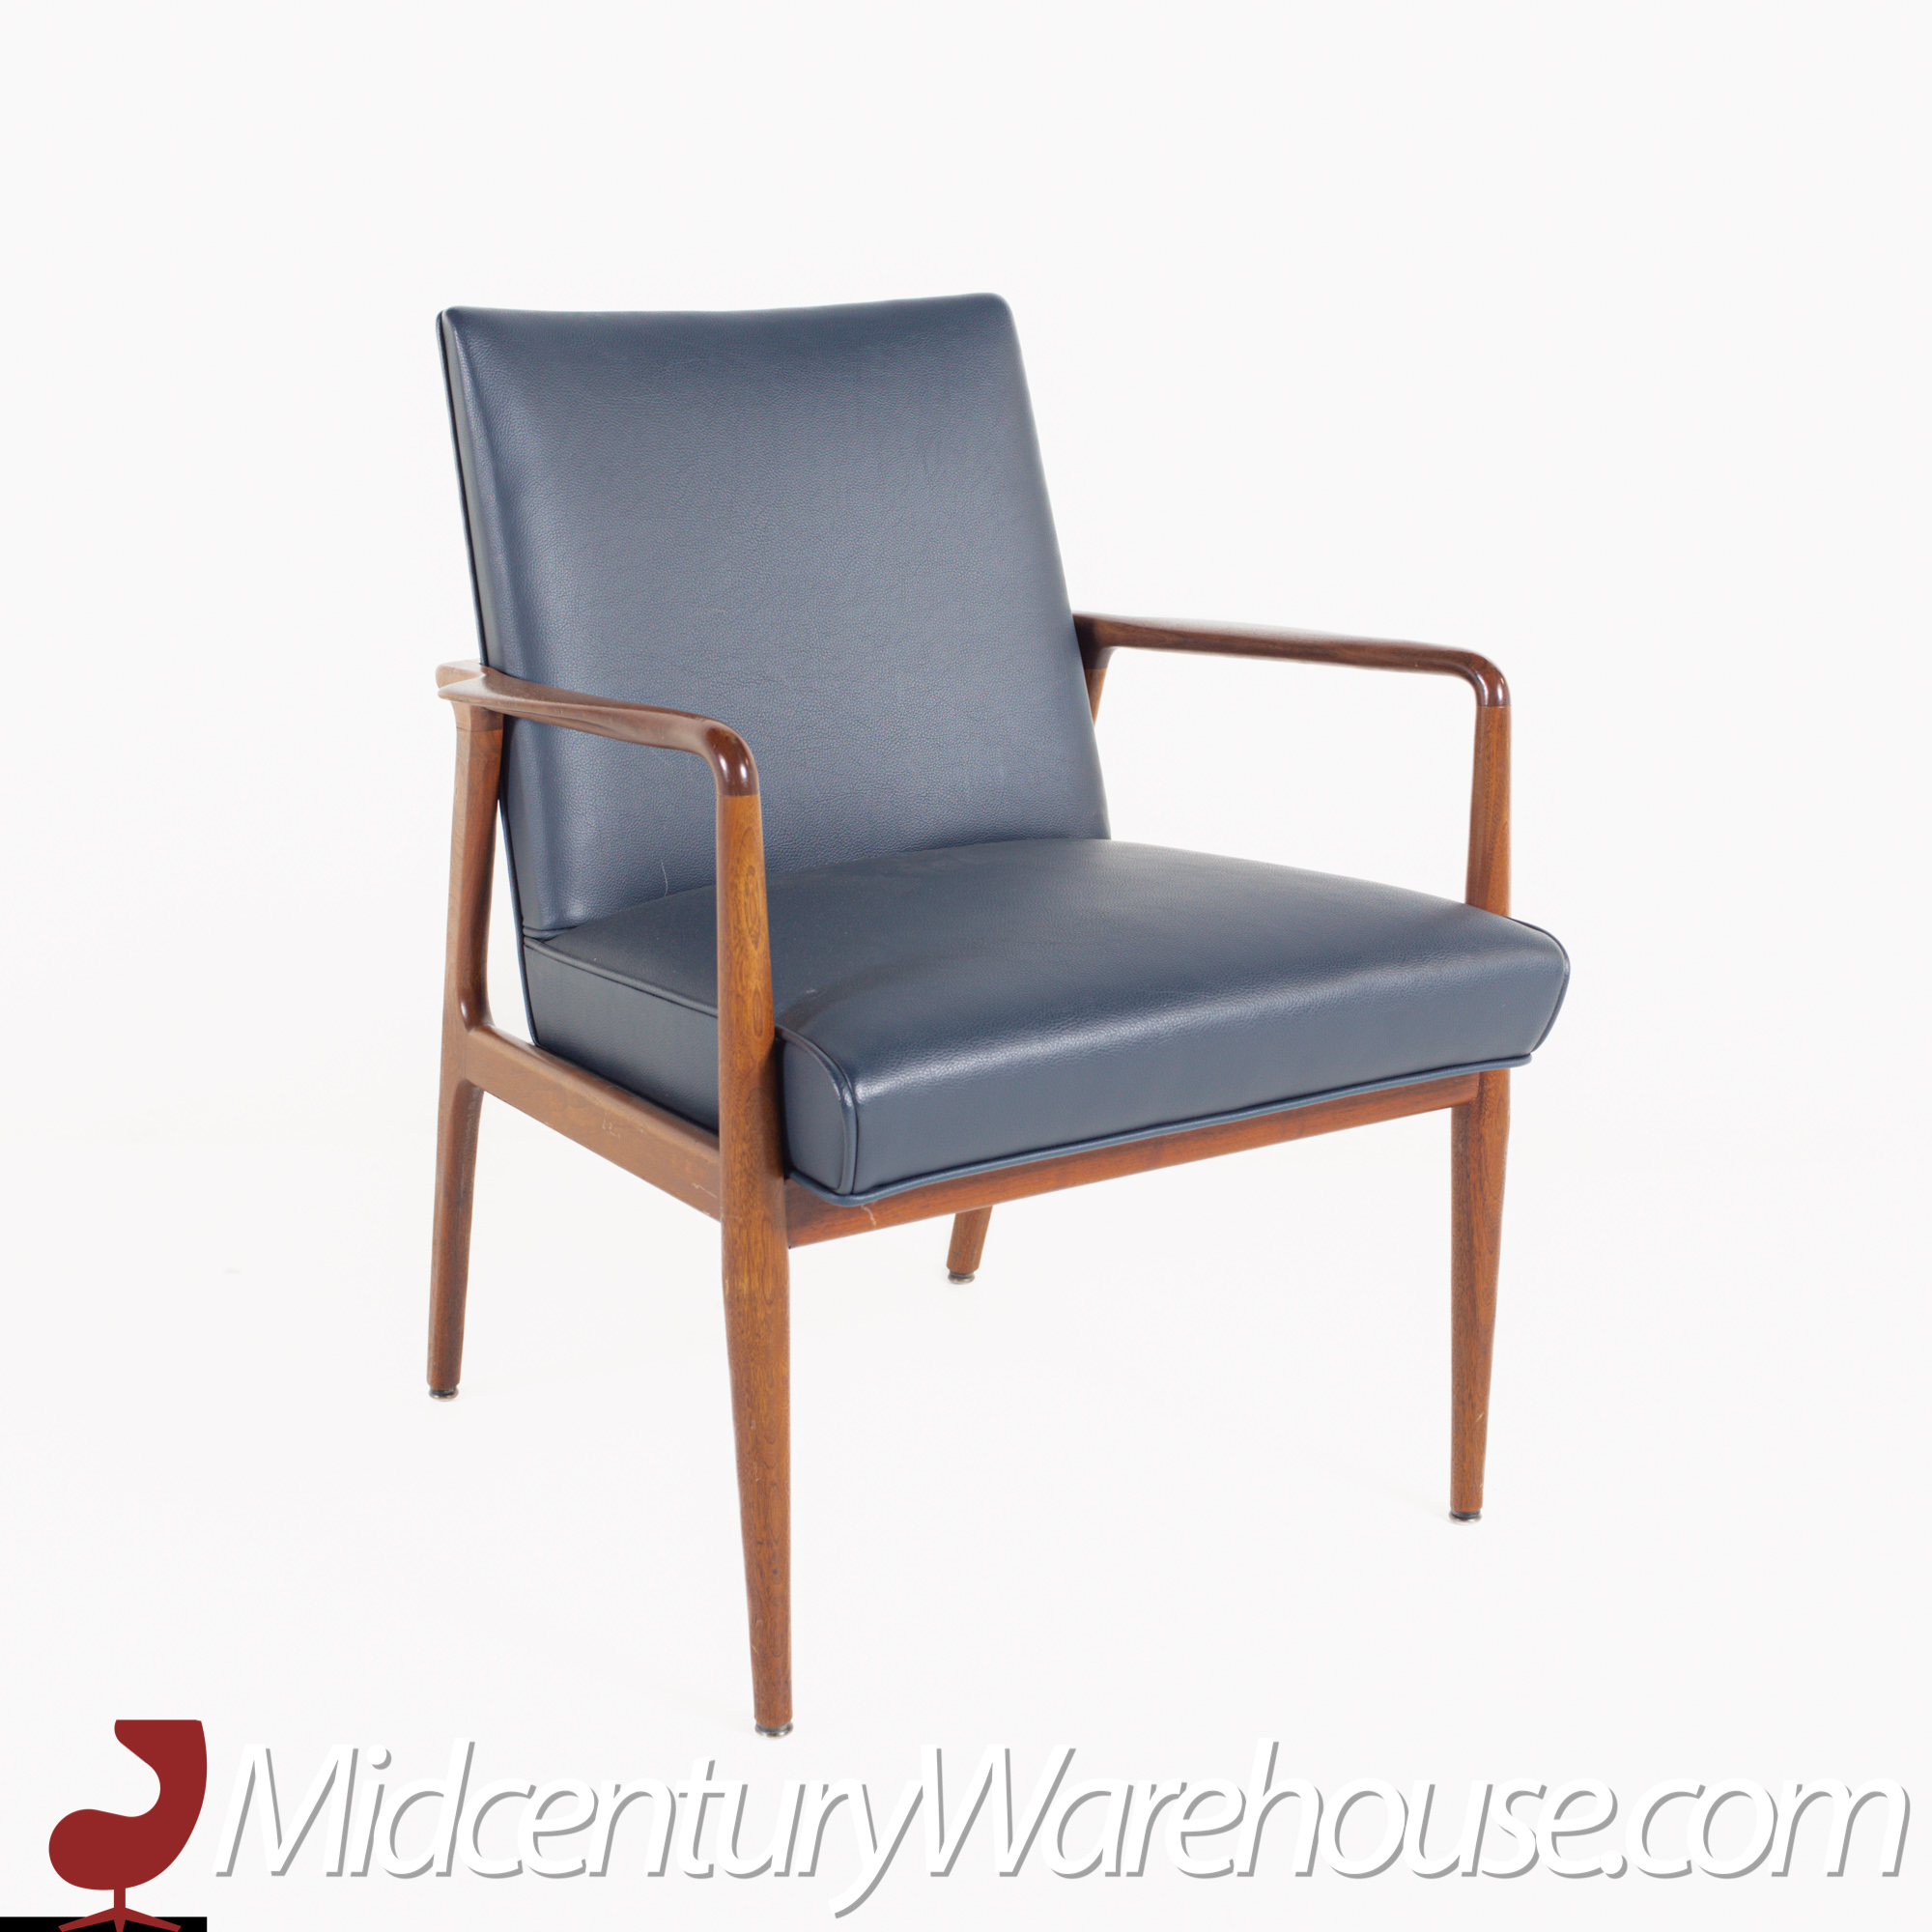 Stow Davis Mid Century Lounge Chairs - Pair